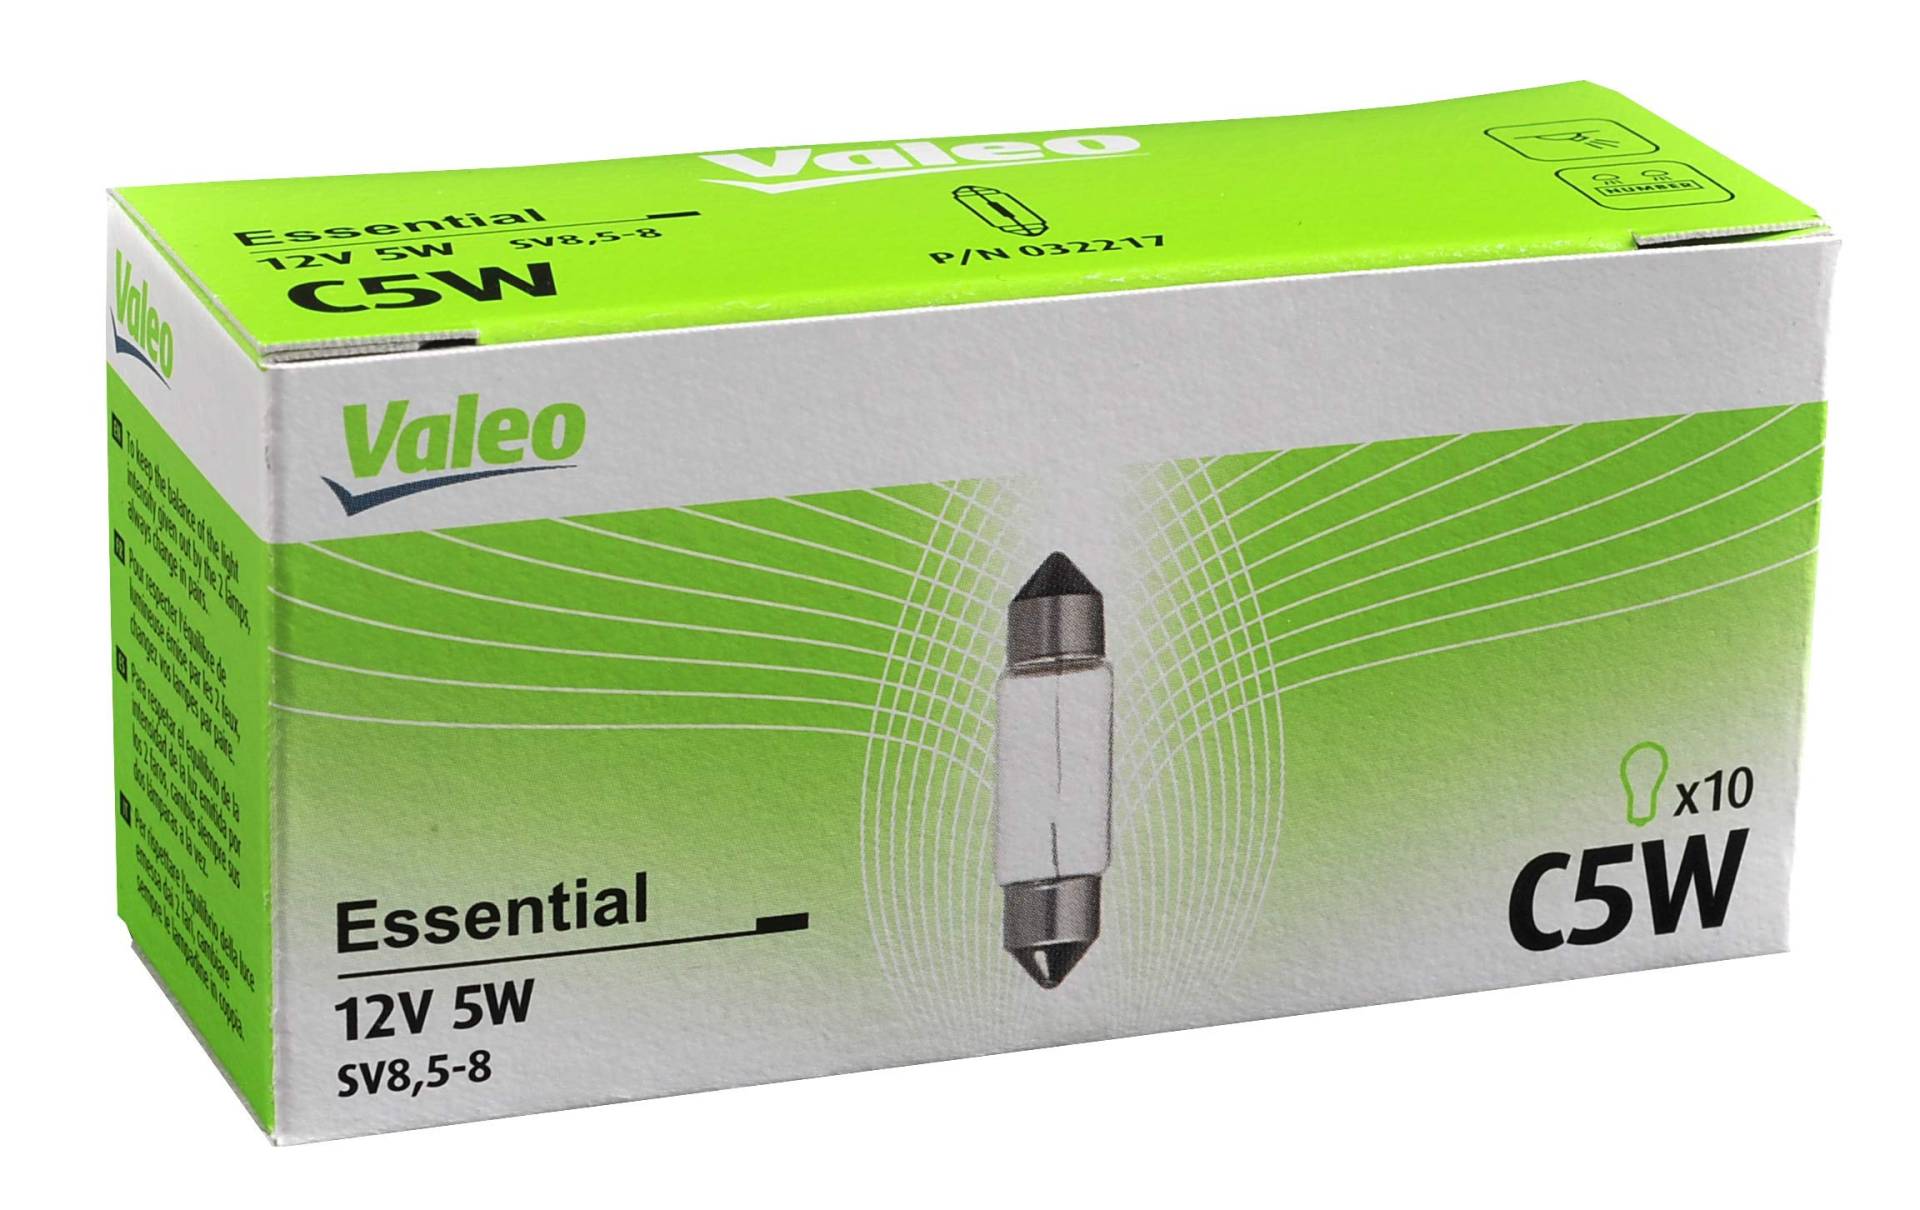 Valeo 32217 C5W Glühlampe Cardboard x10 Essential von Valeo